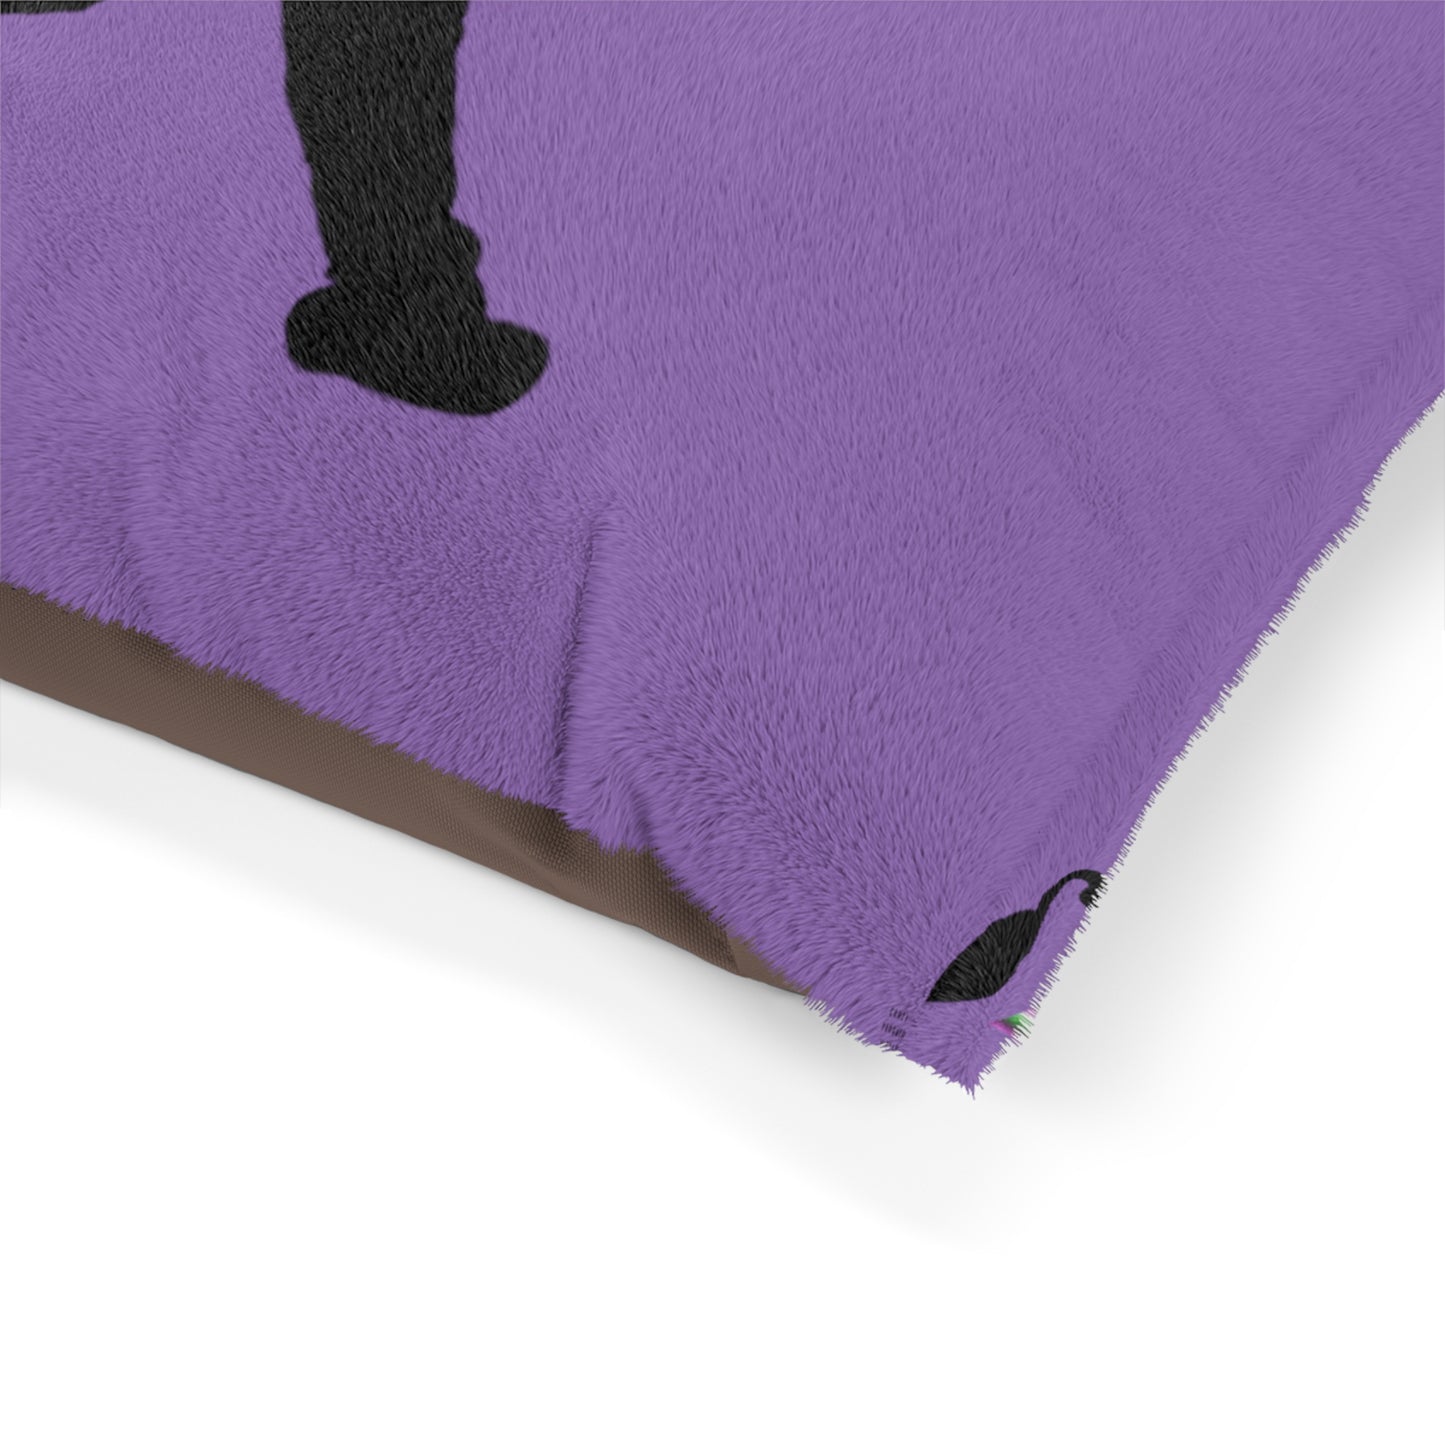 Pet Bed: Baseball Lite Purple